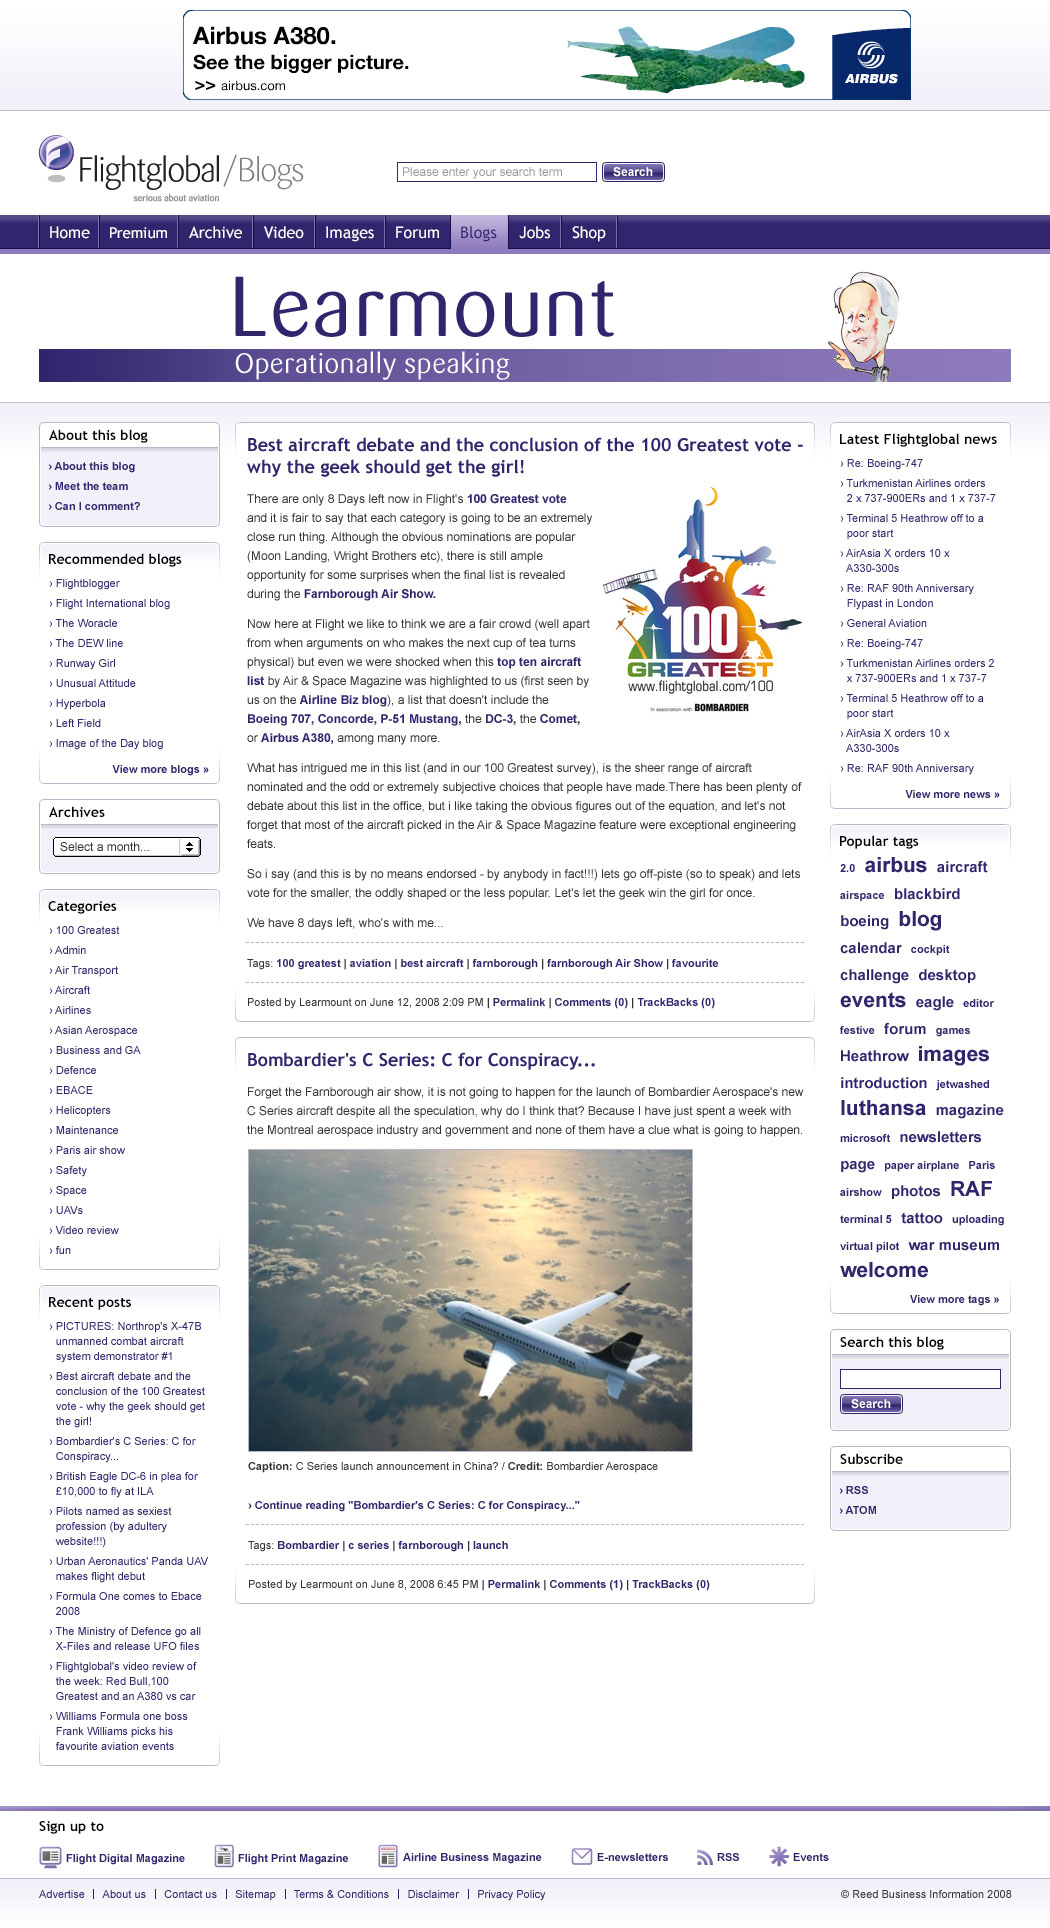 Flight Global - Blogs